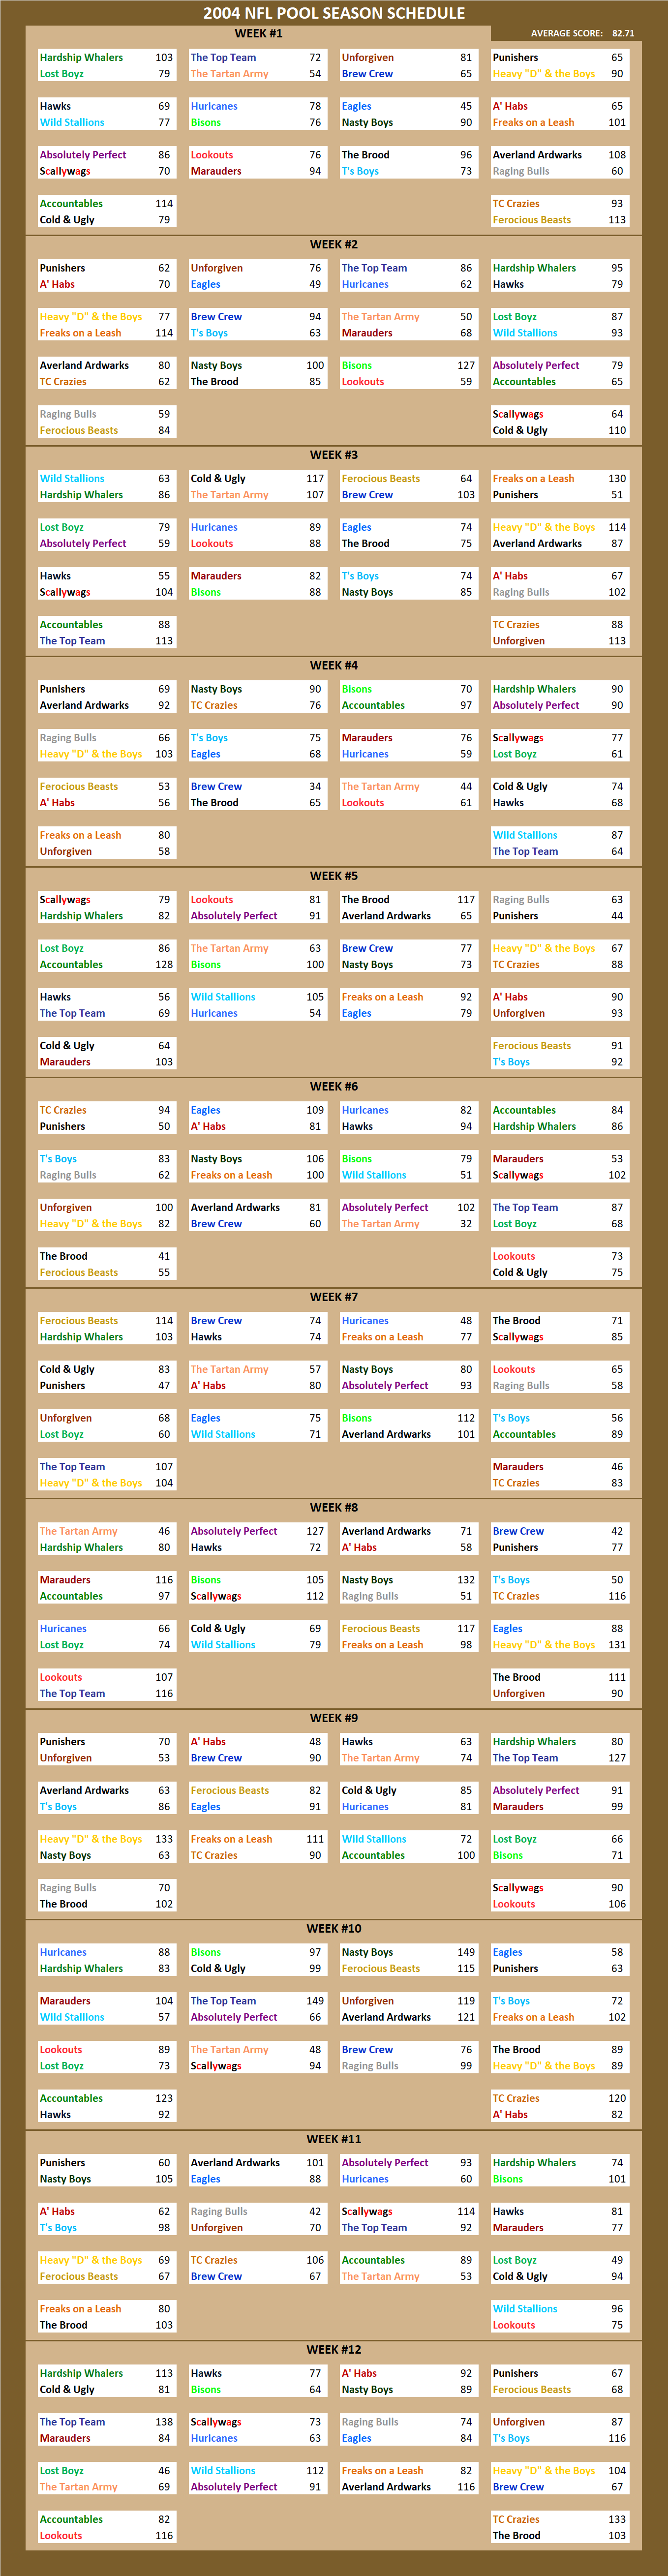 2004 National Football League Pool Season Schedule